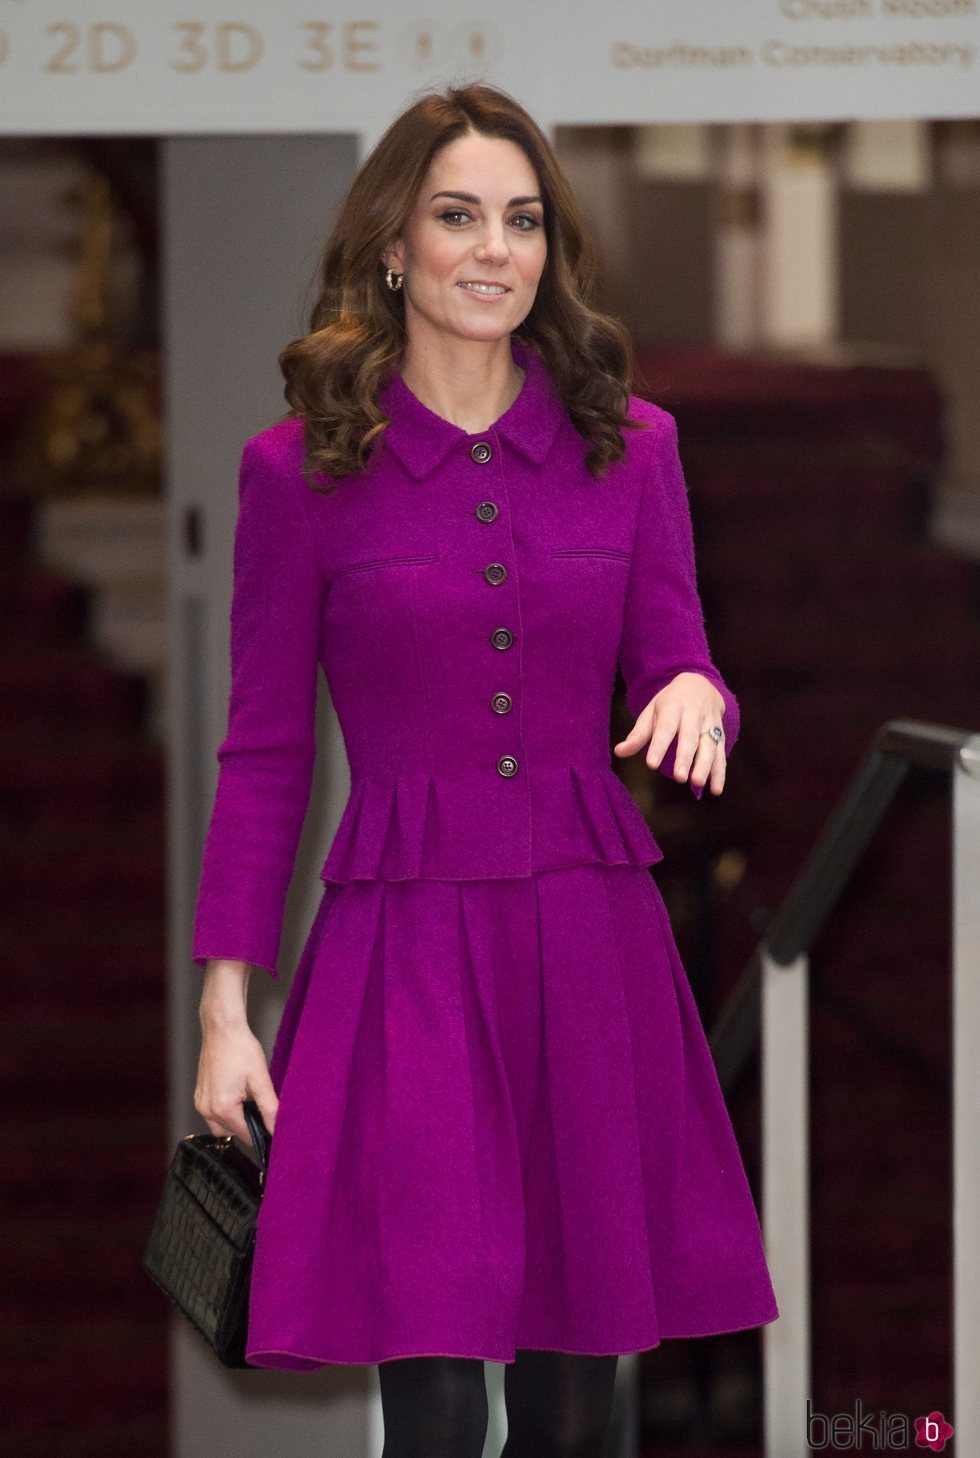 Kate Middleton con la melena con tirabuzones en el Royal Opera House